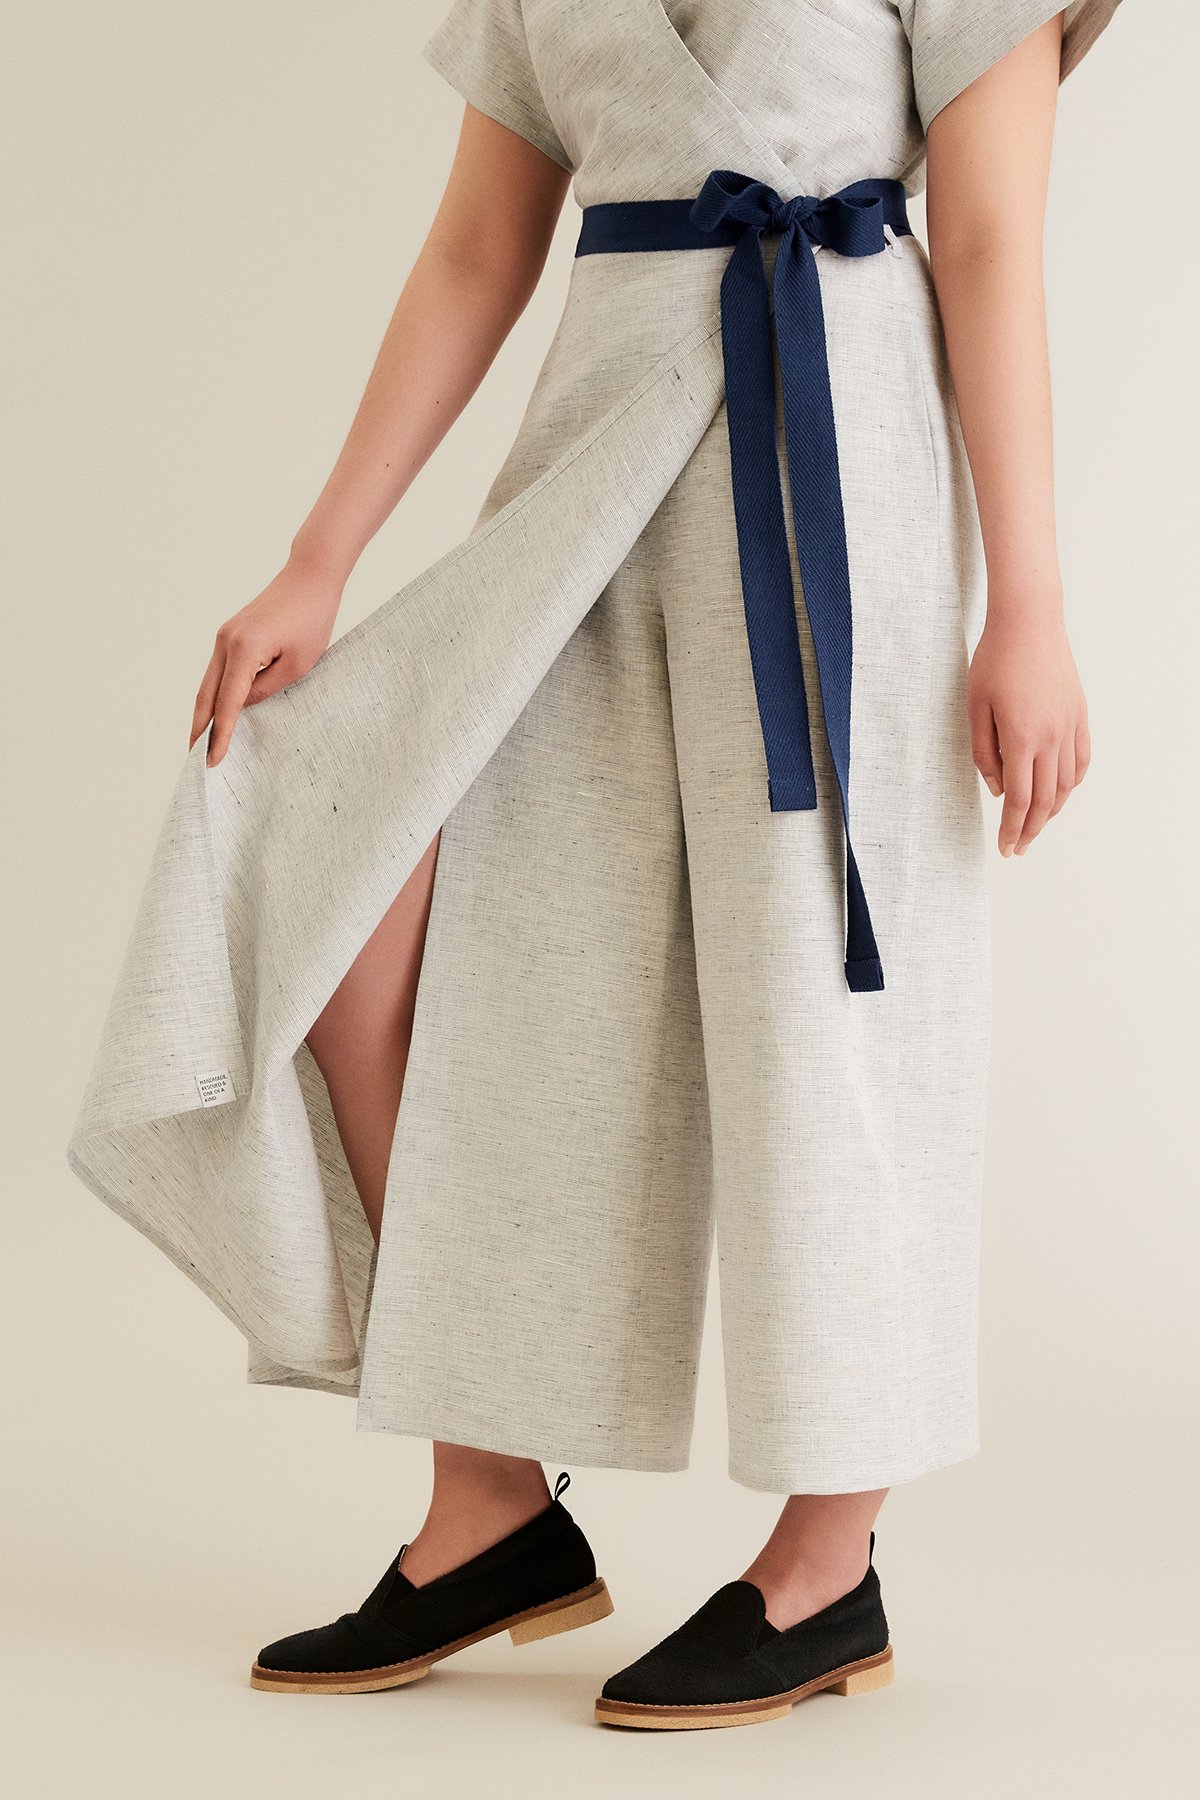 OLIVIA Wrap Dress PDF — Sew Creative